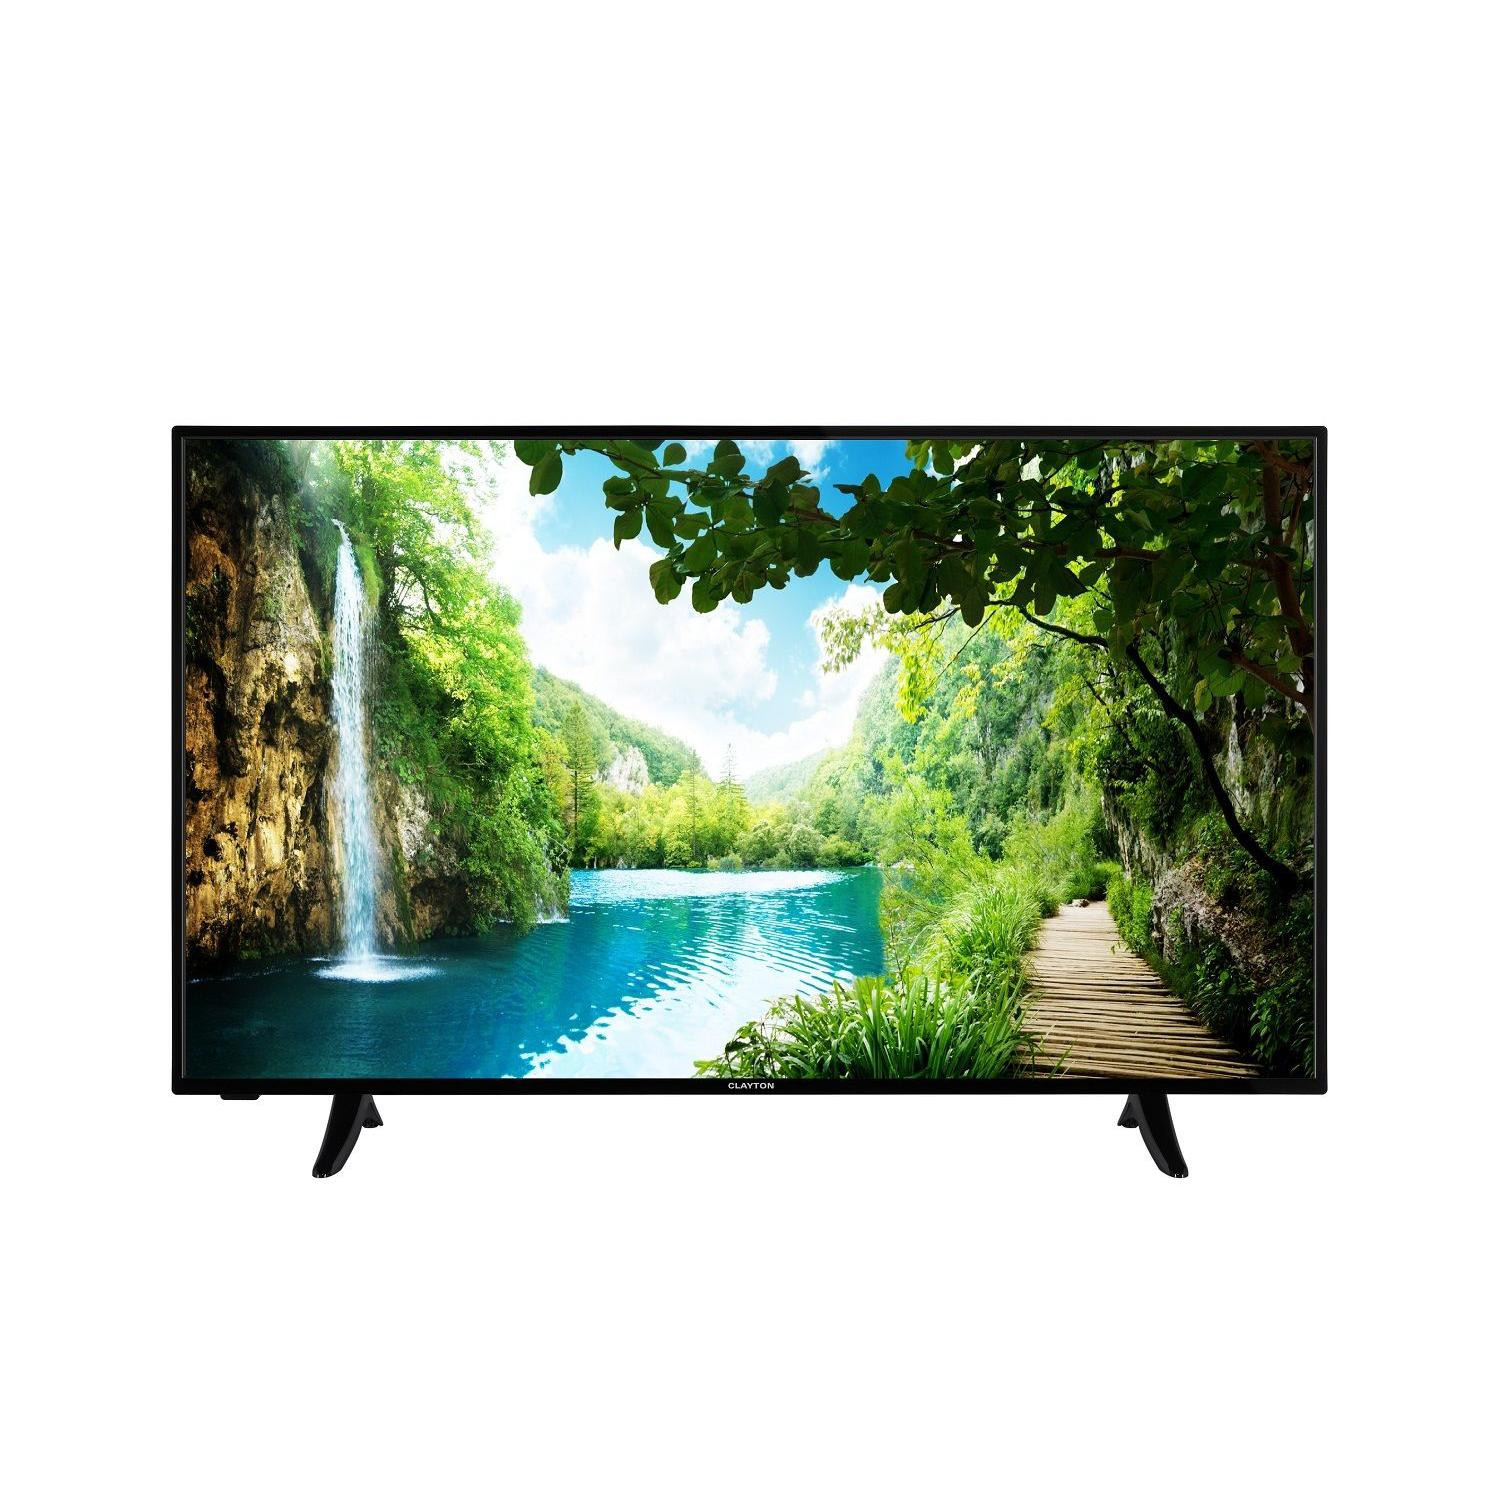  CLAYTON TV LED UHD 4K 50" ( 127 cm ) - CL50UHDAND21B - Noir  CLAYTON CLAYTON  3700410357578